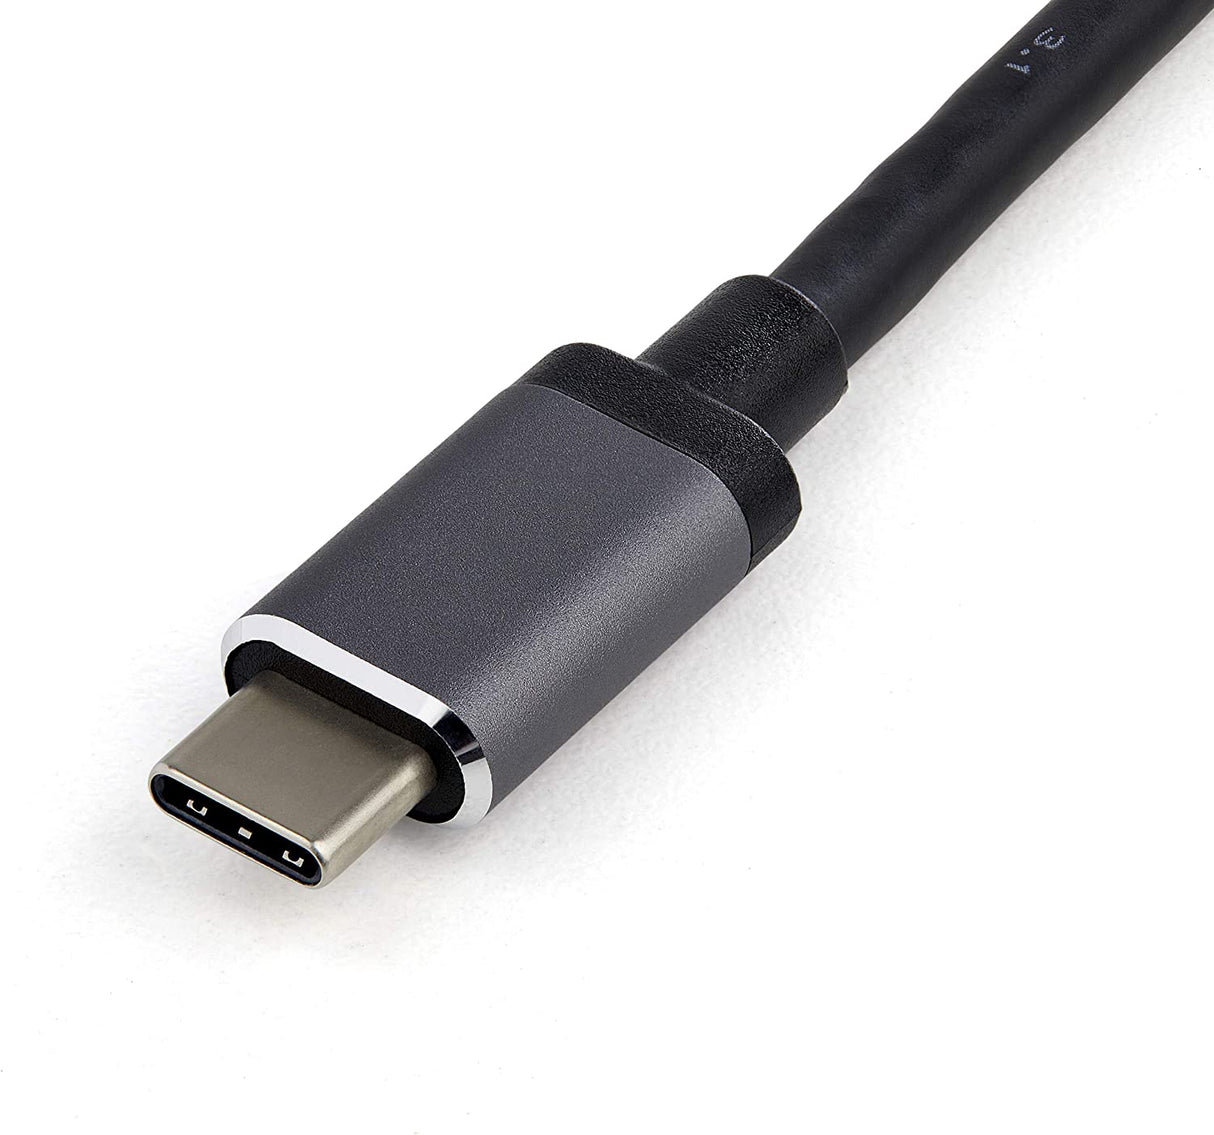 StarTech.com USB C Multiport Adapter - USB-C Mini Travel Dock w/ 4K HDMI or 1080p VGA - 3x USB 3.0 Hub, SD, GbE, Audio, 100W PD Pass-Through - Portable Docking Station for Laptop/Tablet (DKT30CHVAUSP)